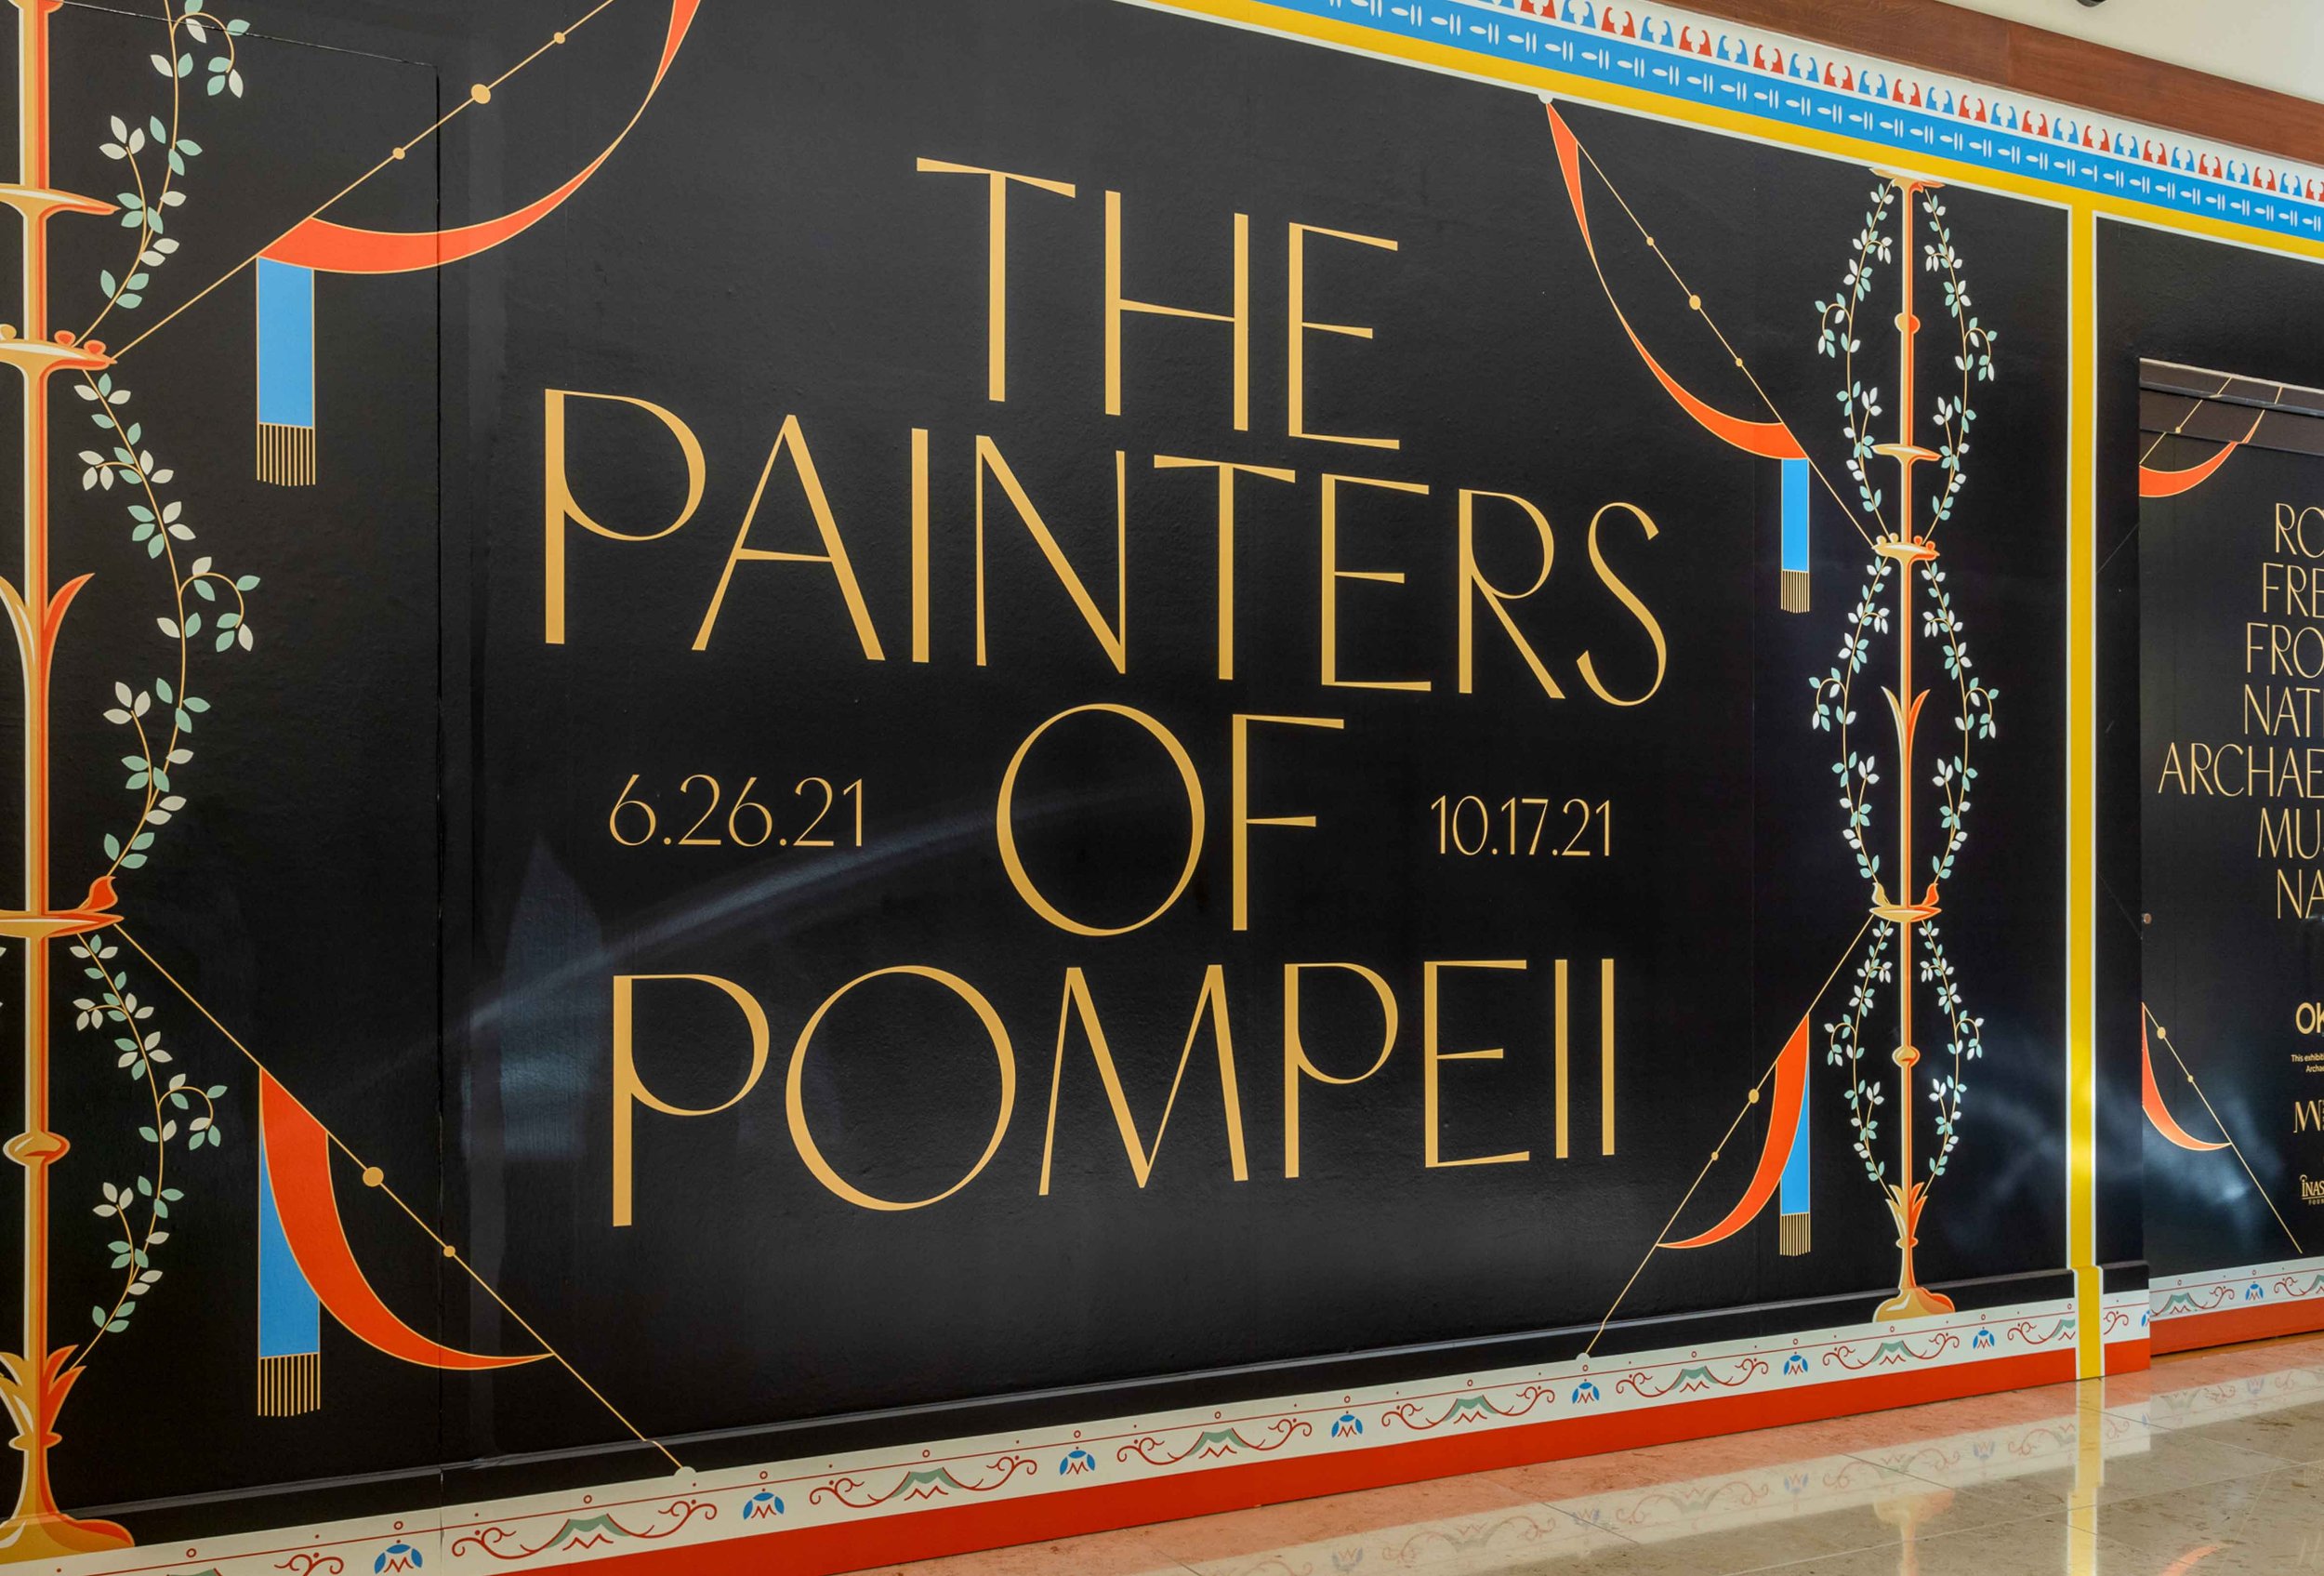 Julie-Ruffin-DeWalt-OKCMOA-Painters-of-Pompeii.jpg